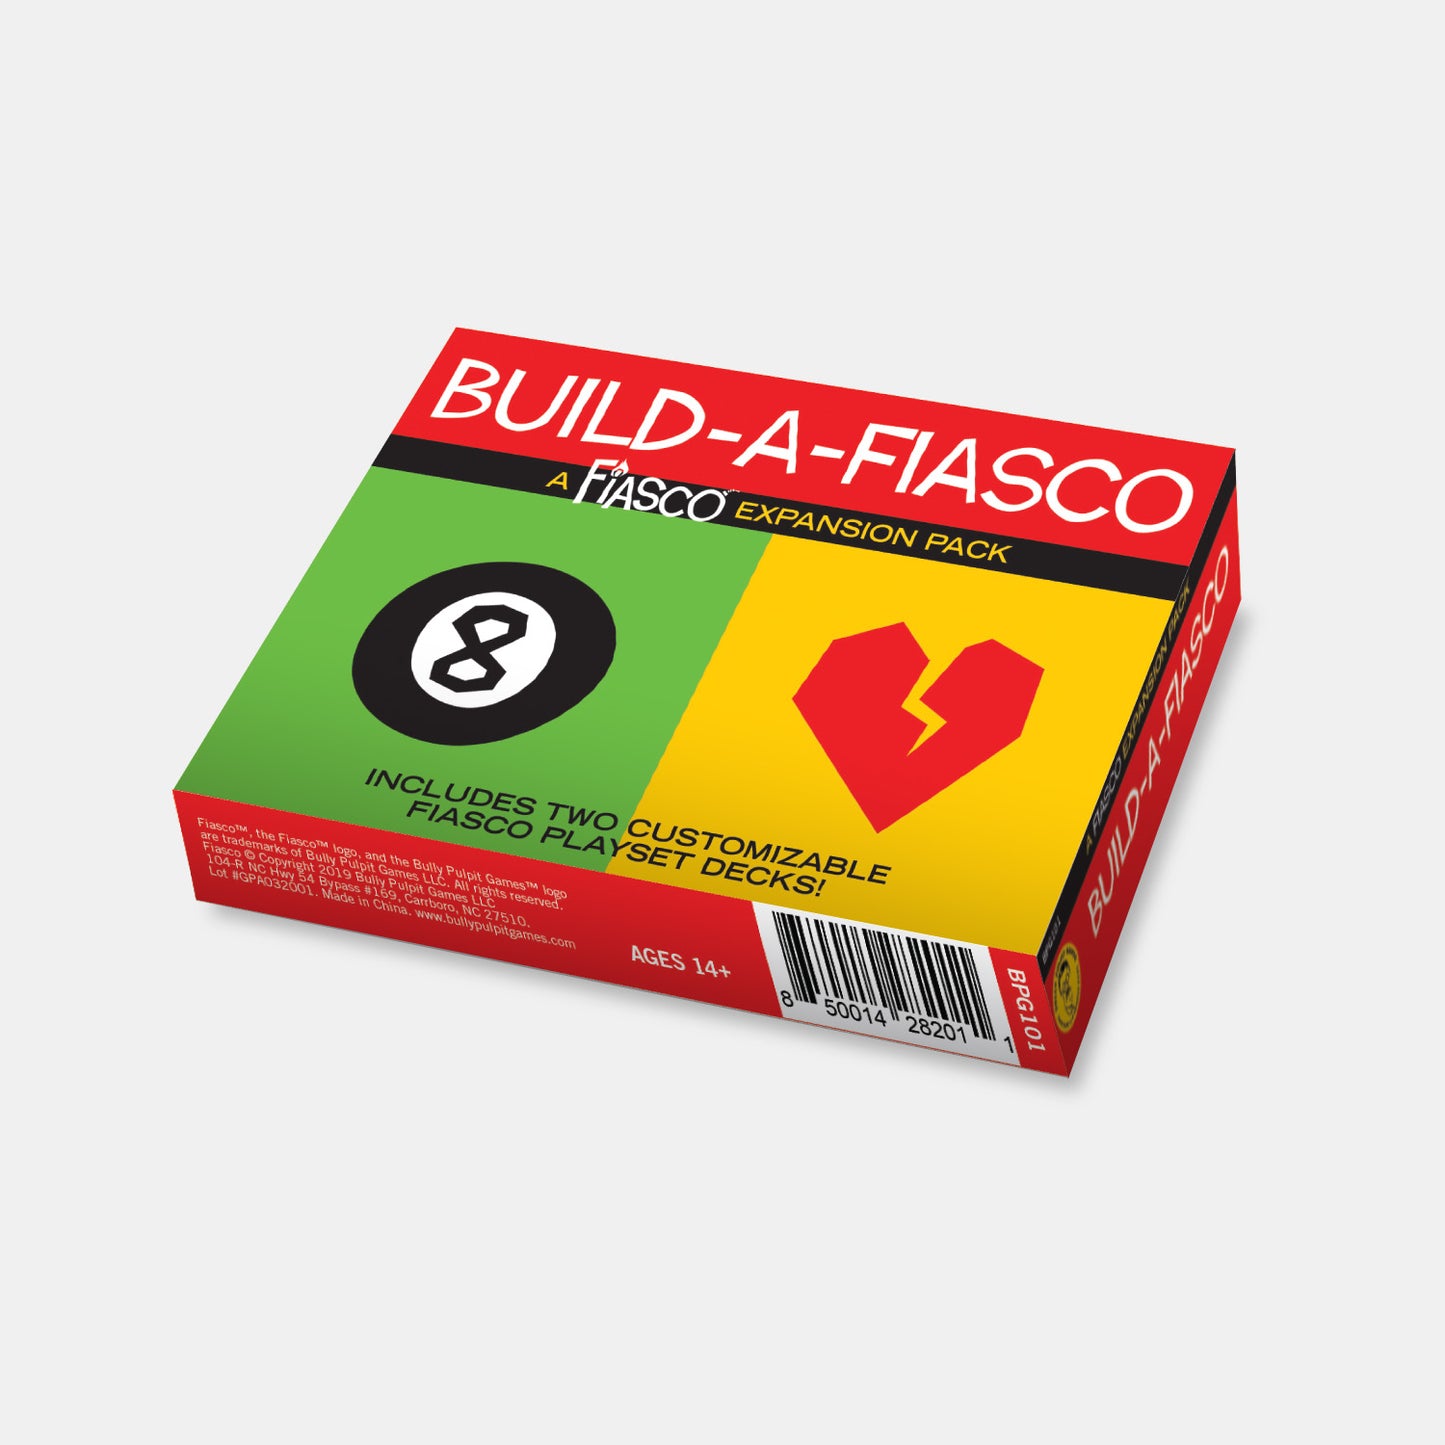 Fiasco Expansion Pack: Build-a-Fiasco